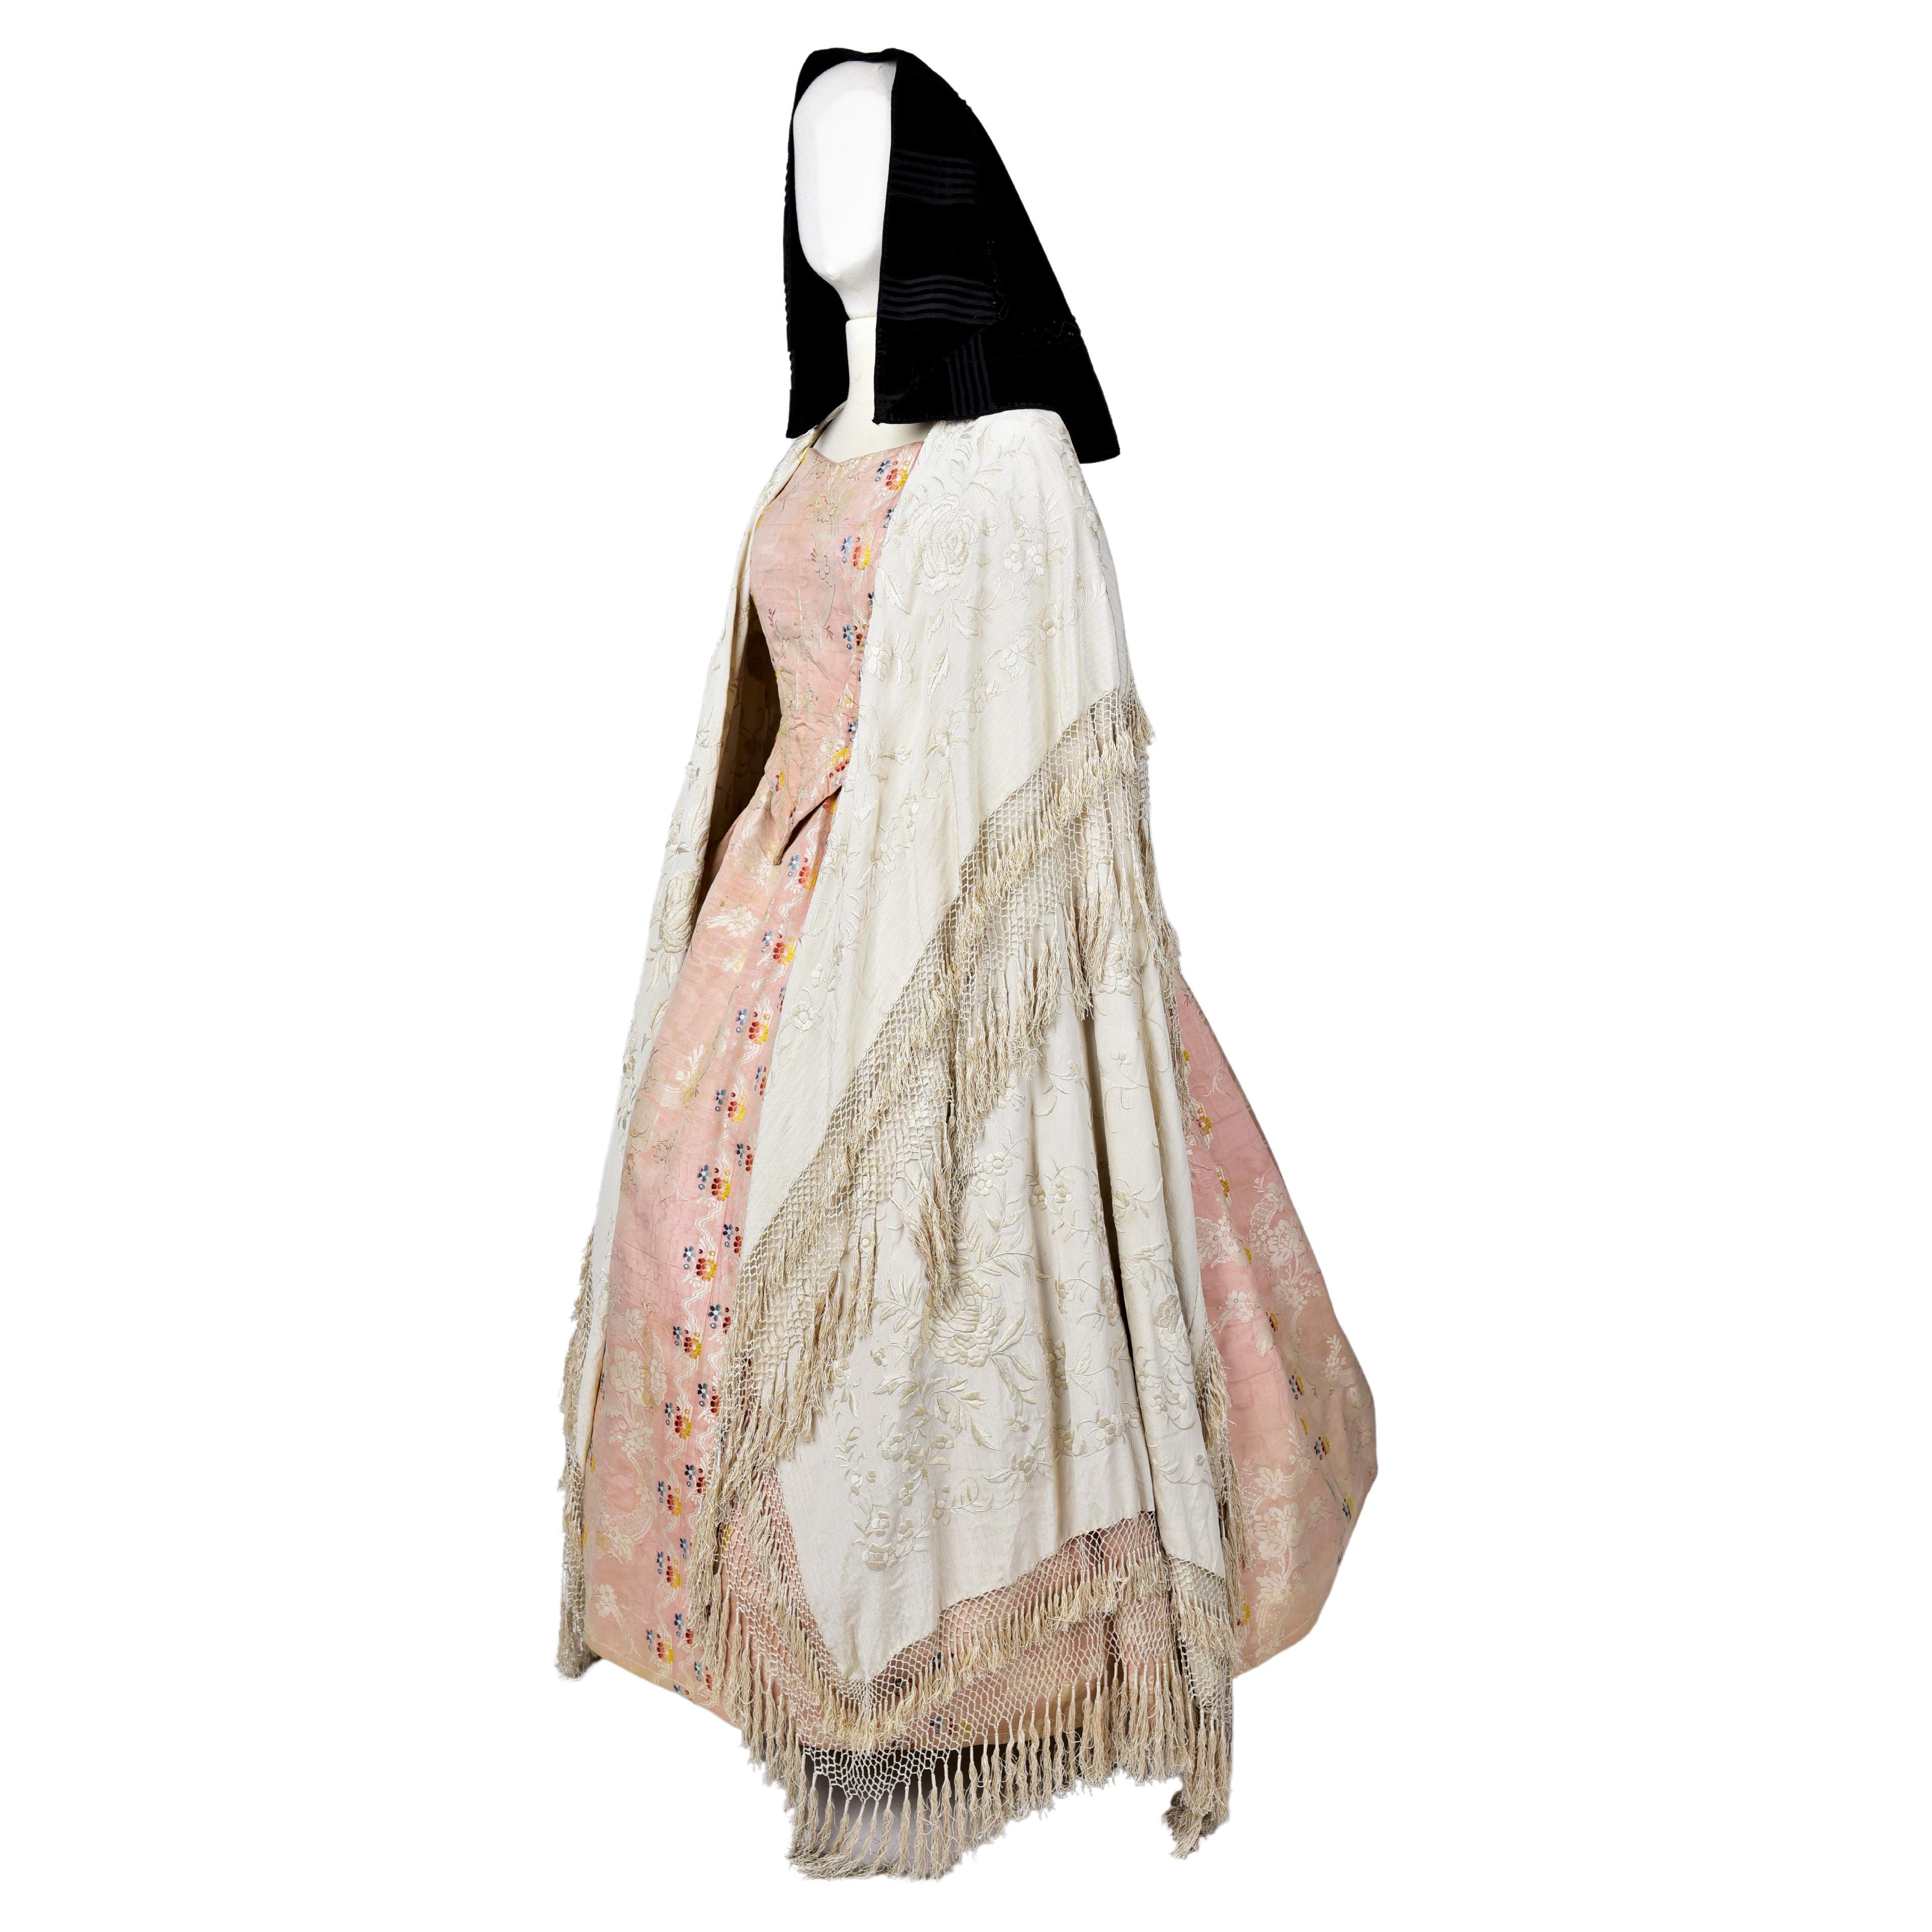 Ceremonial Crinoline Dress, Mantilla and Manilla Shawl - Spain Circa 1860